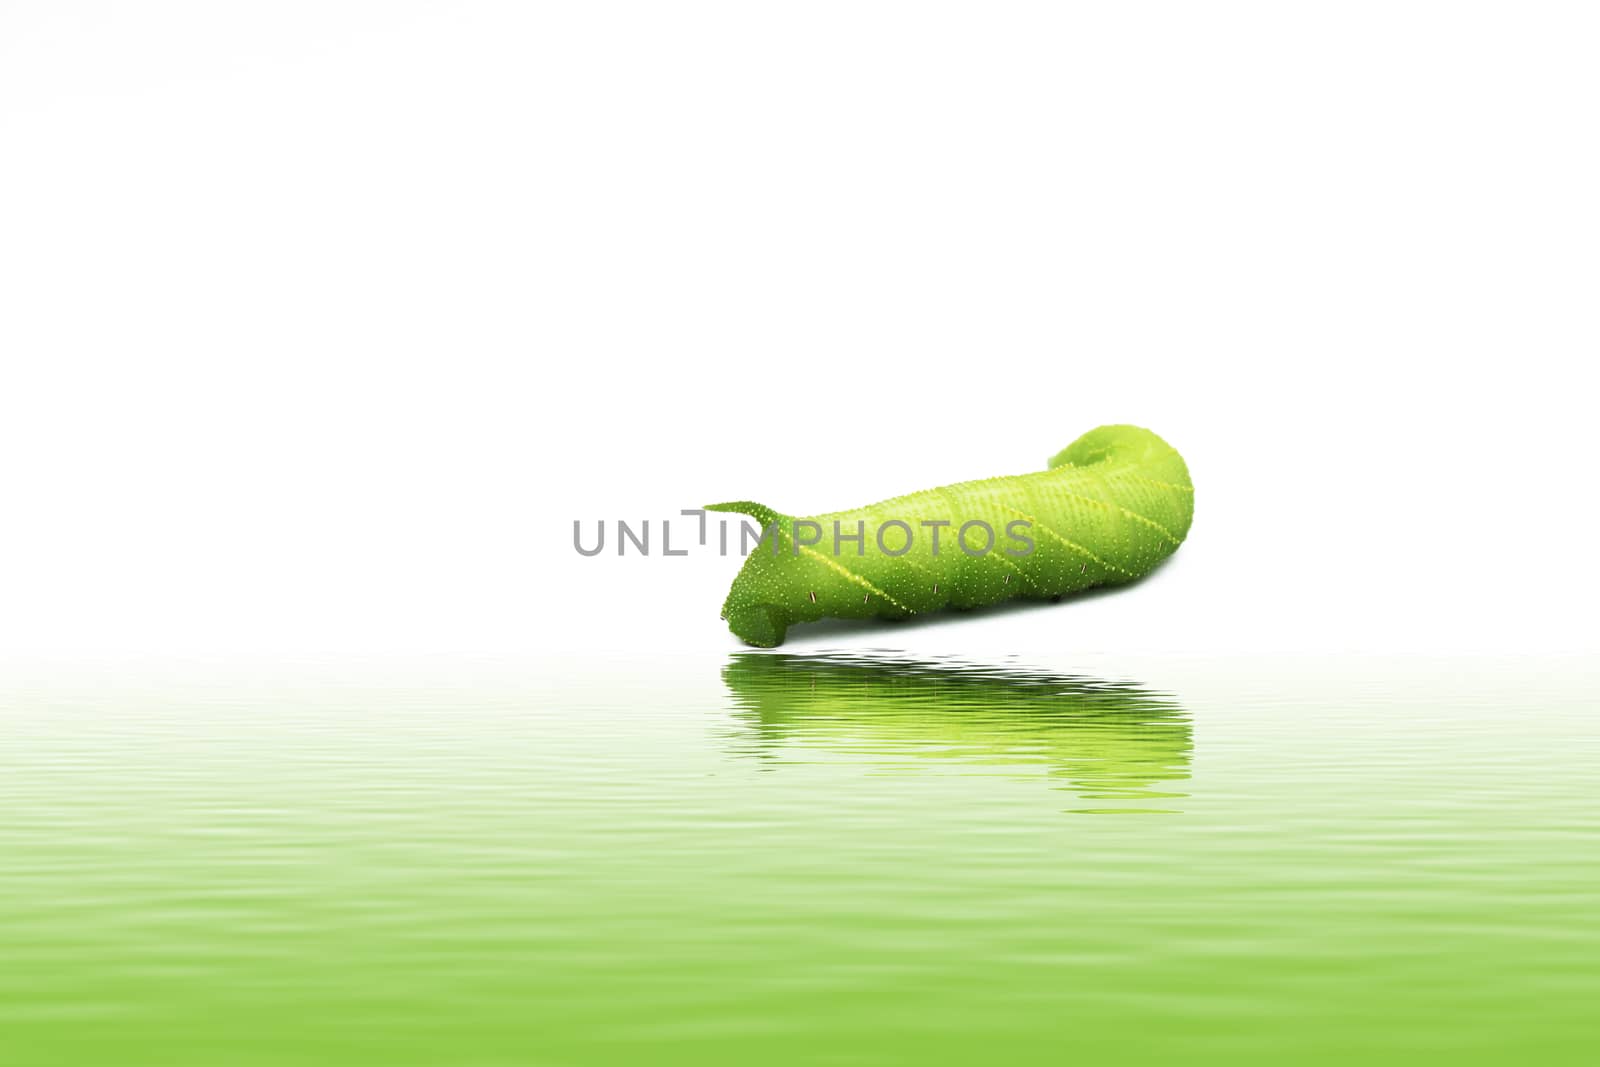 A close up of the green caterpillar